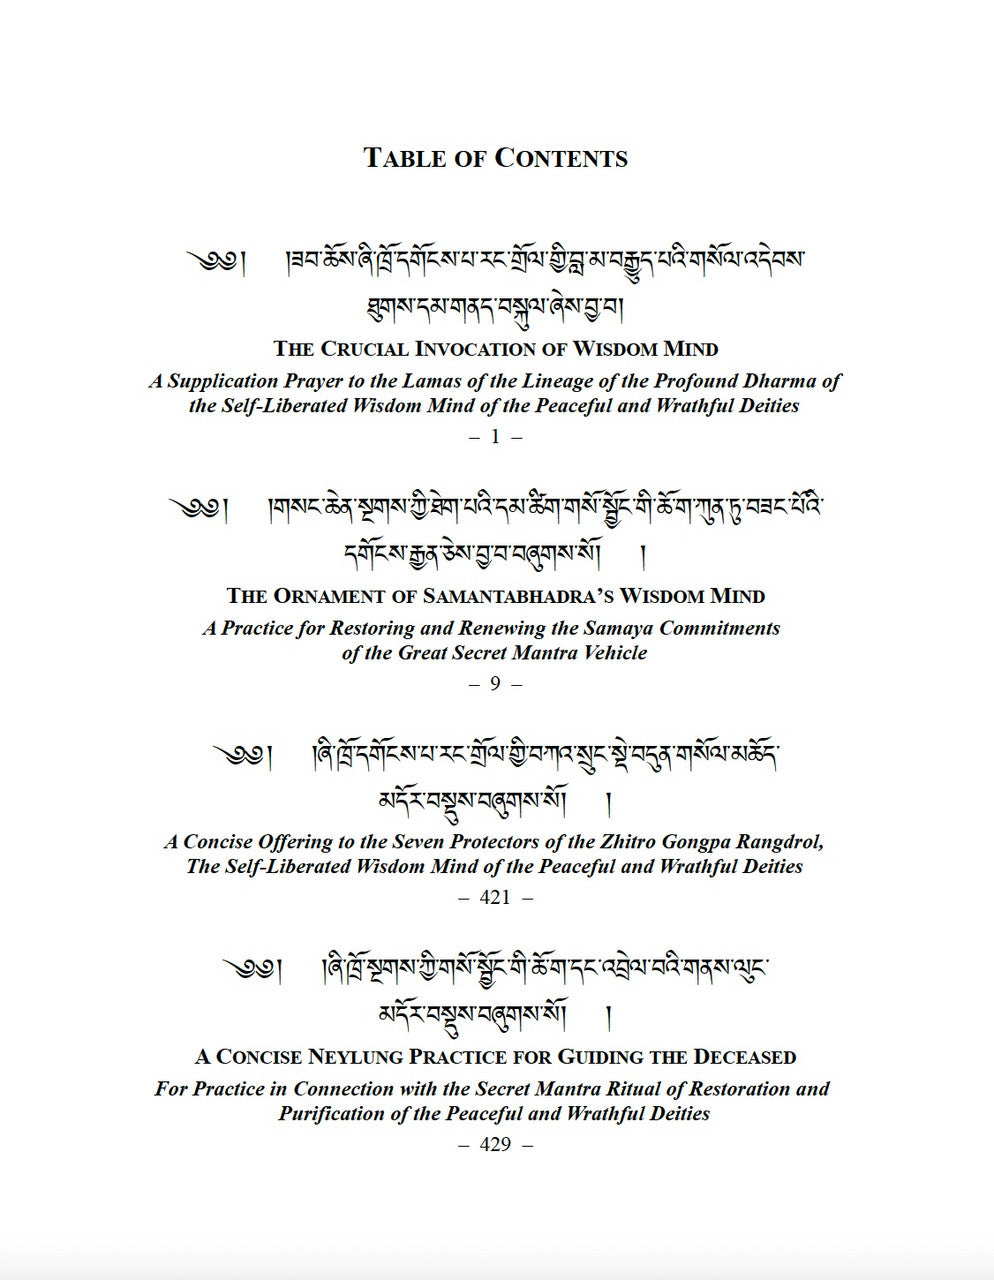 Zhitro table of contents